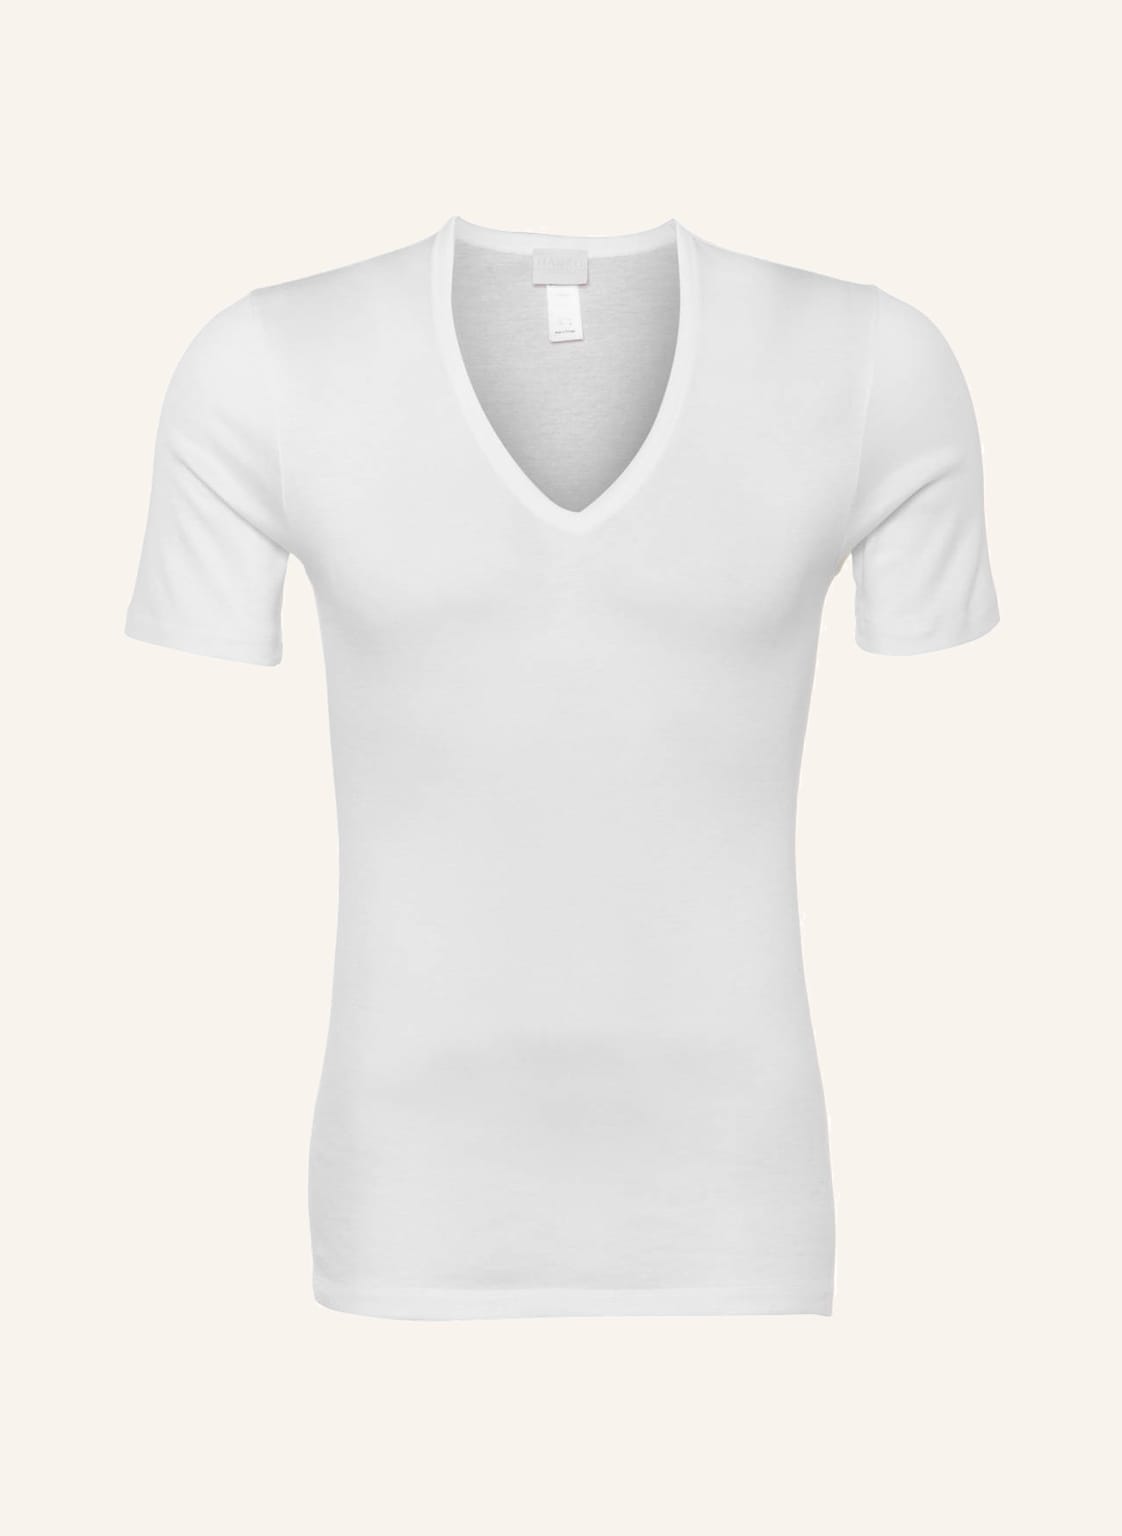 Hanro V-Shirt Cotton Pure weiss von Hanro